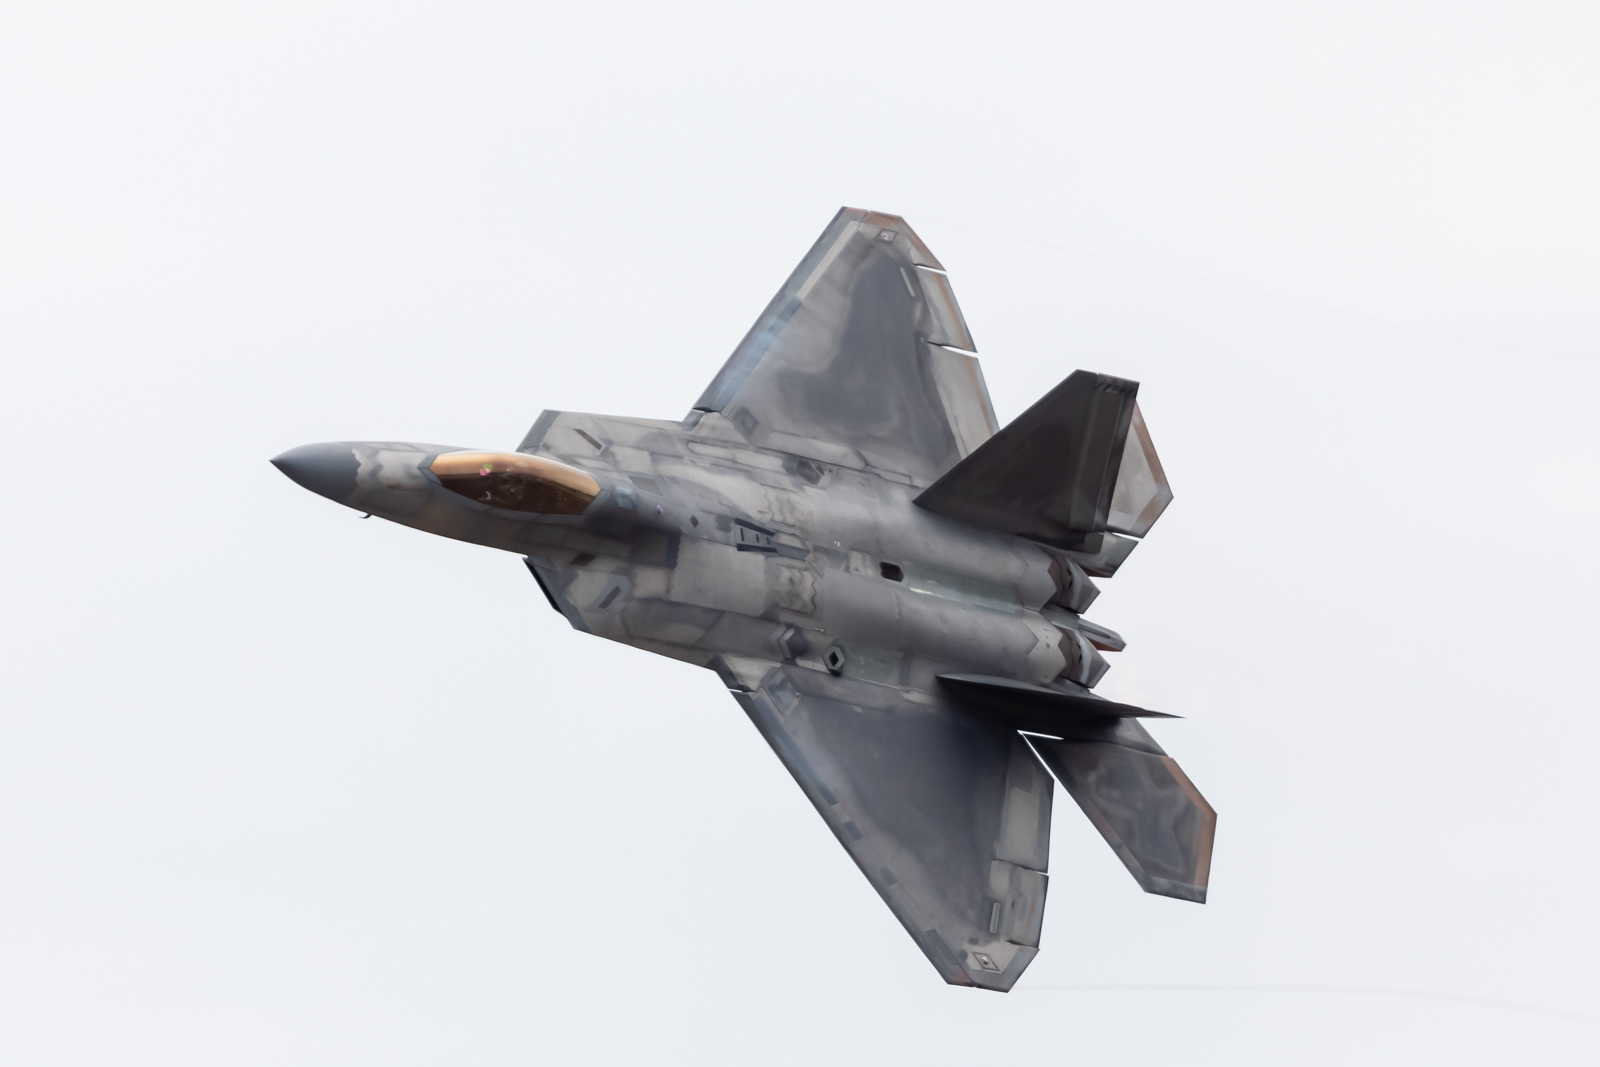 F-22 Raptor, Macdill Airfest 2018, Tampa, Florida